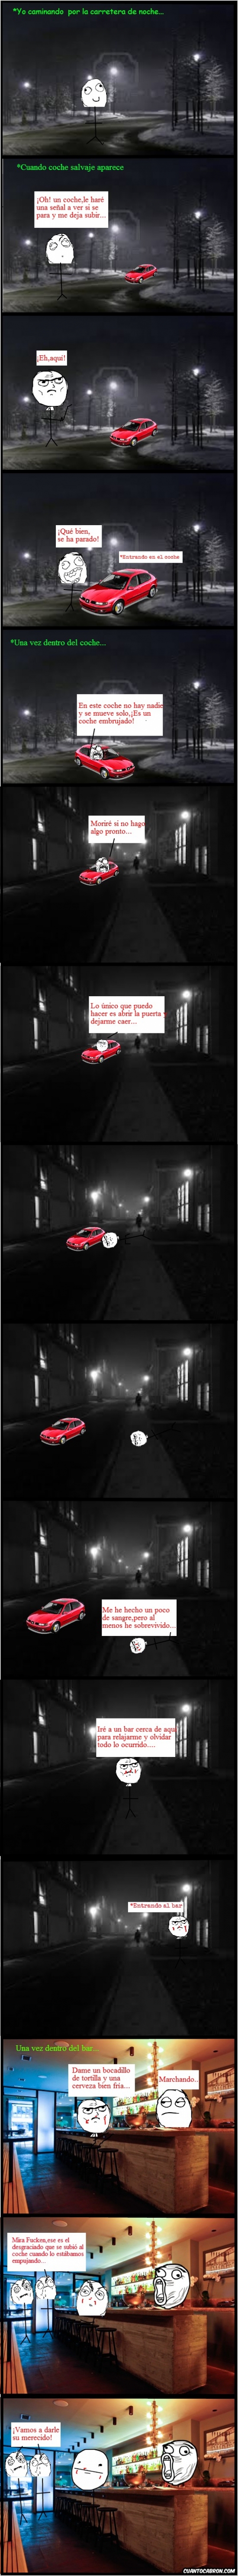 Pokerface - El coche fantasma